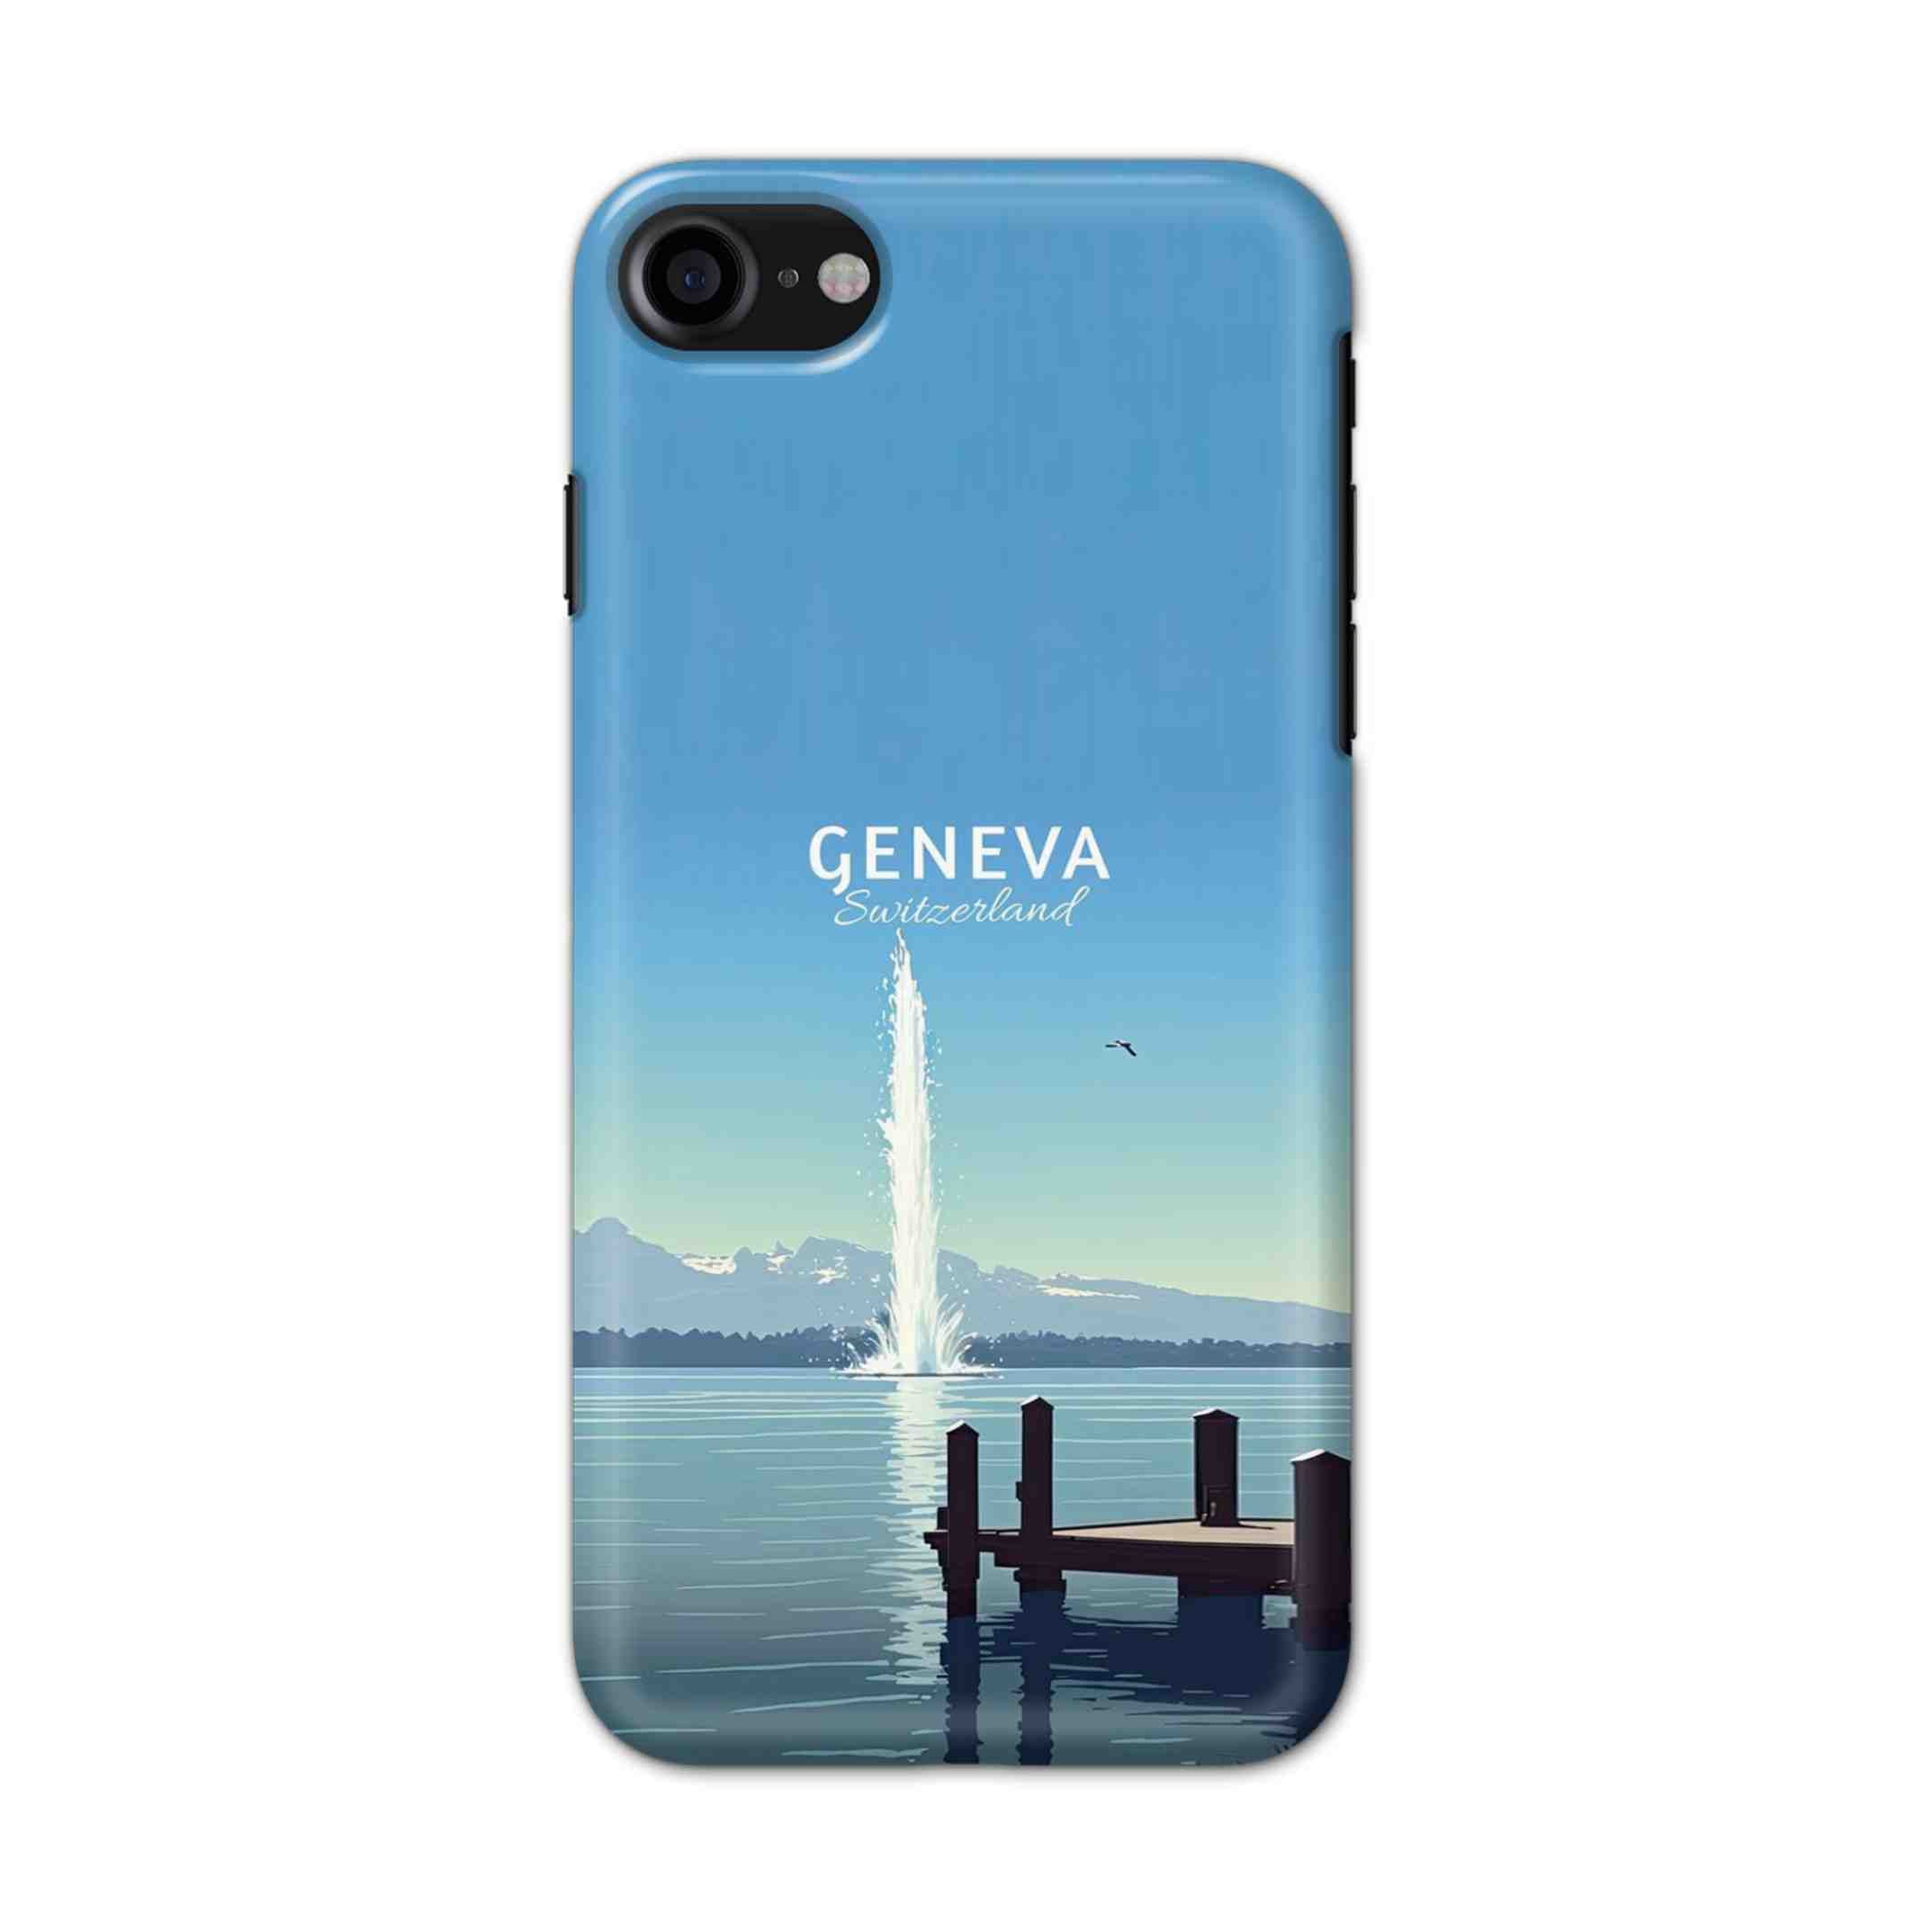 Buy Geneva Hard Back Mobile Phone Case/Cover For iPhone 7 / 8 Online